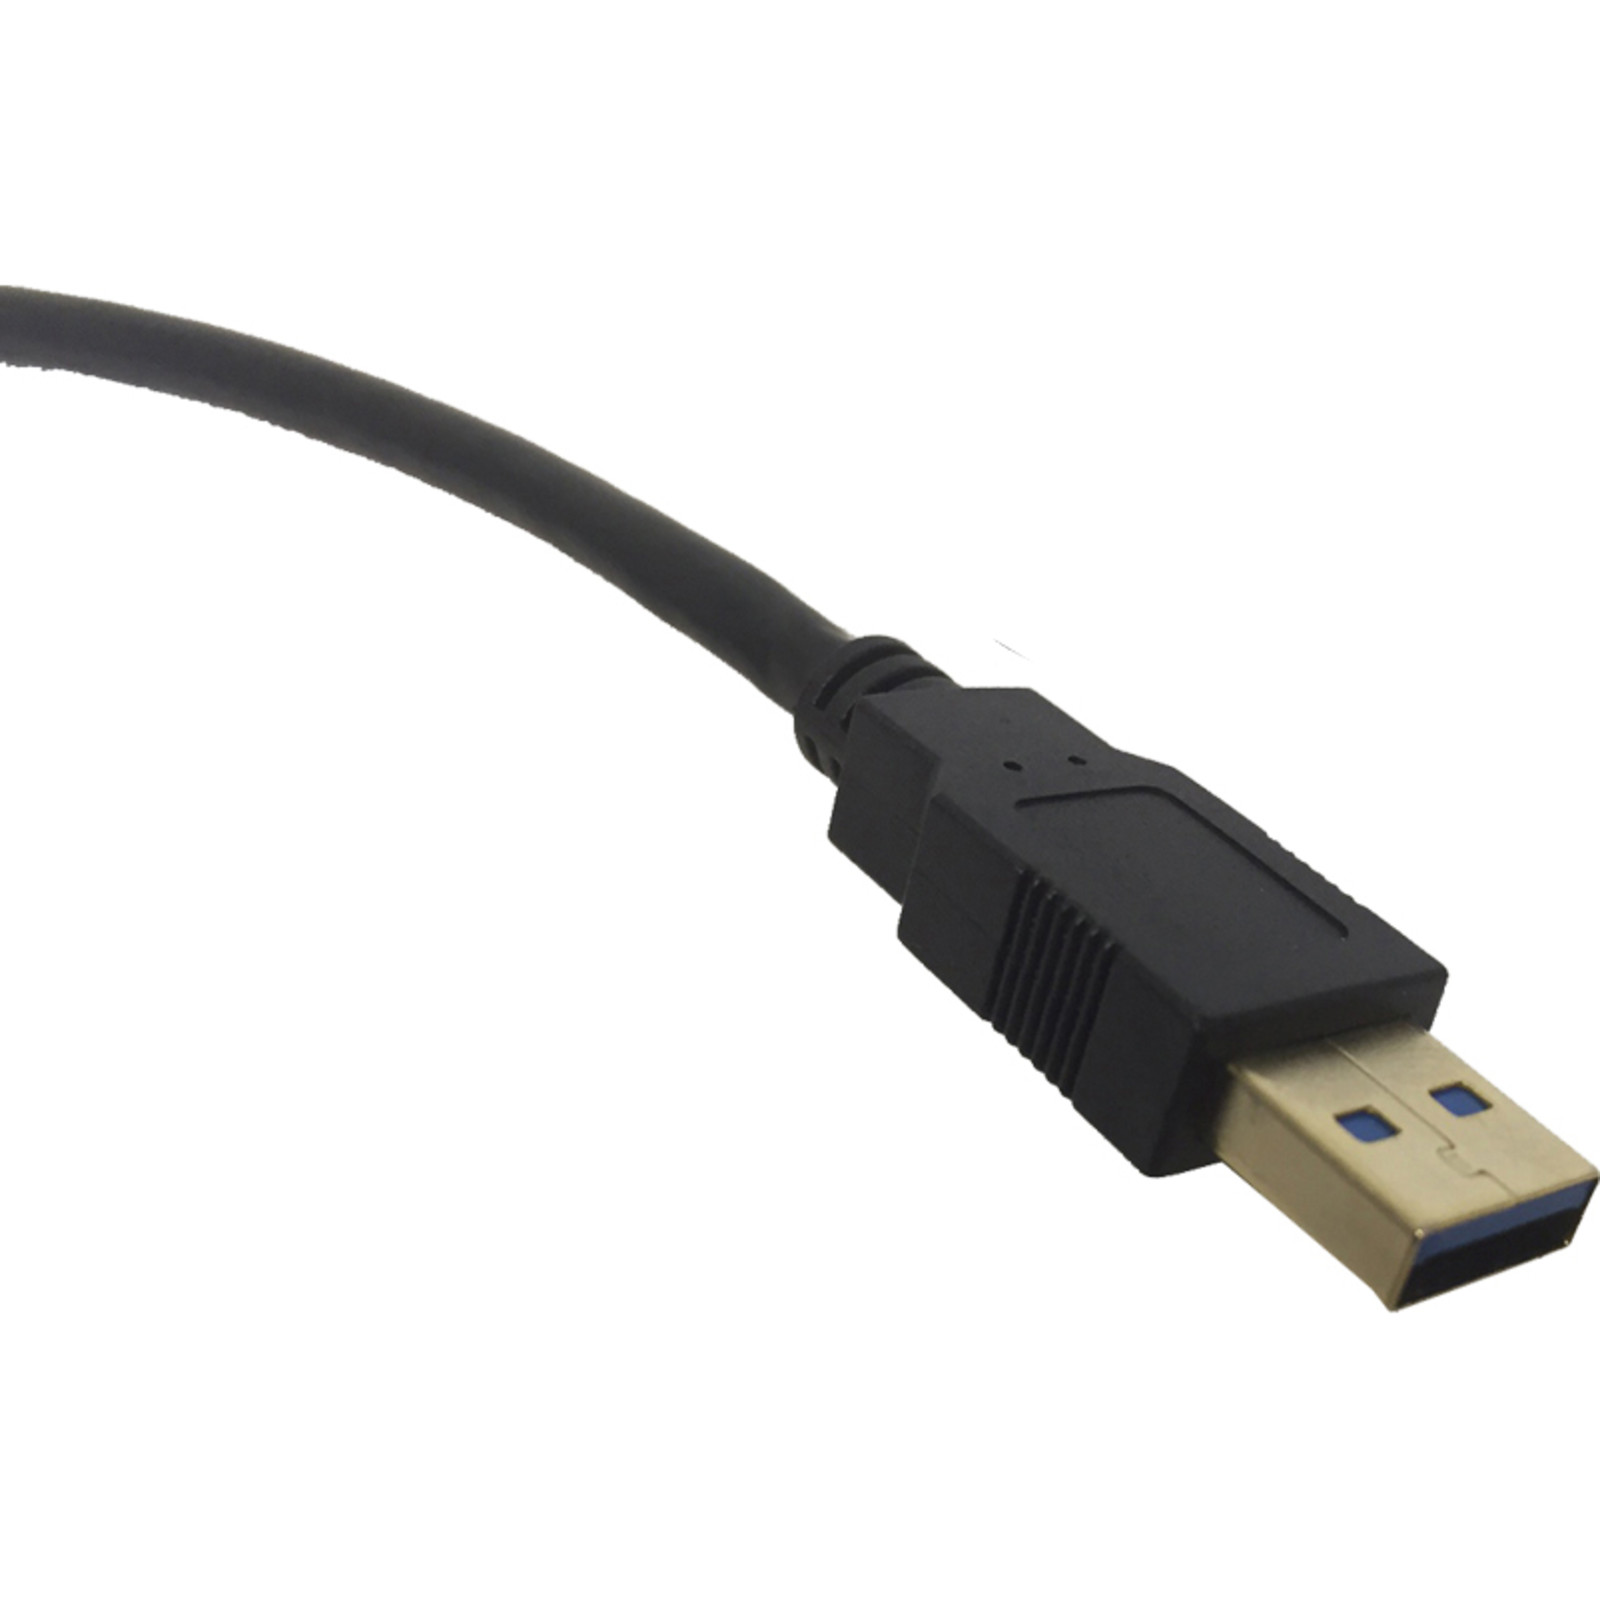 Excel câble rallonge USB 2.0 A mâle - A femelle - Noir - 3 m